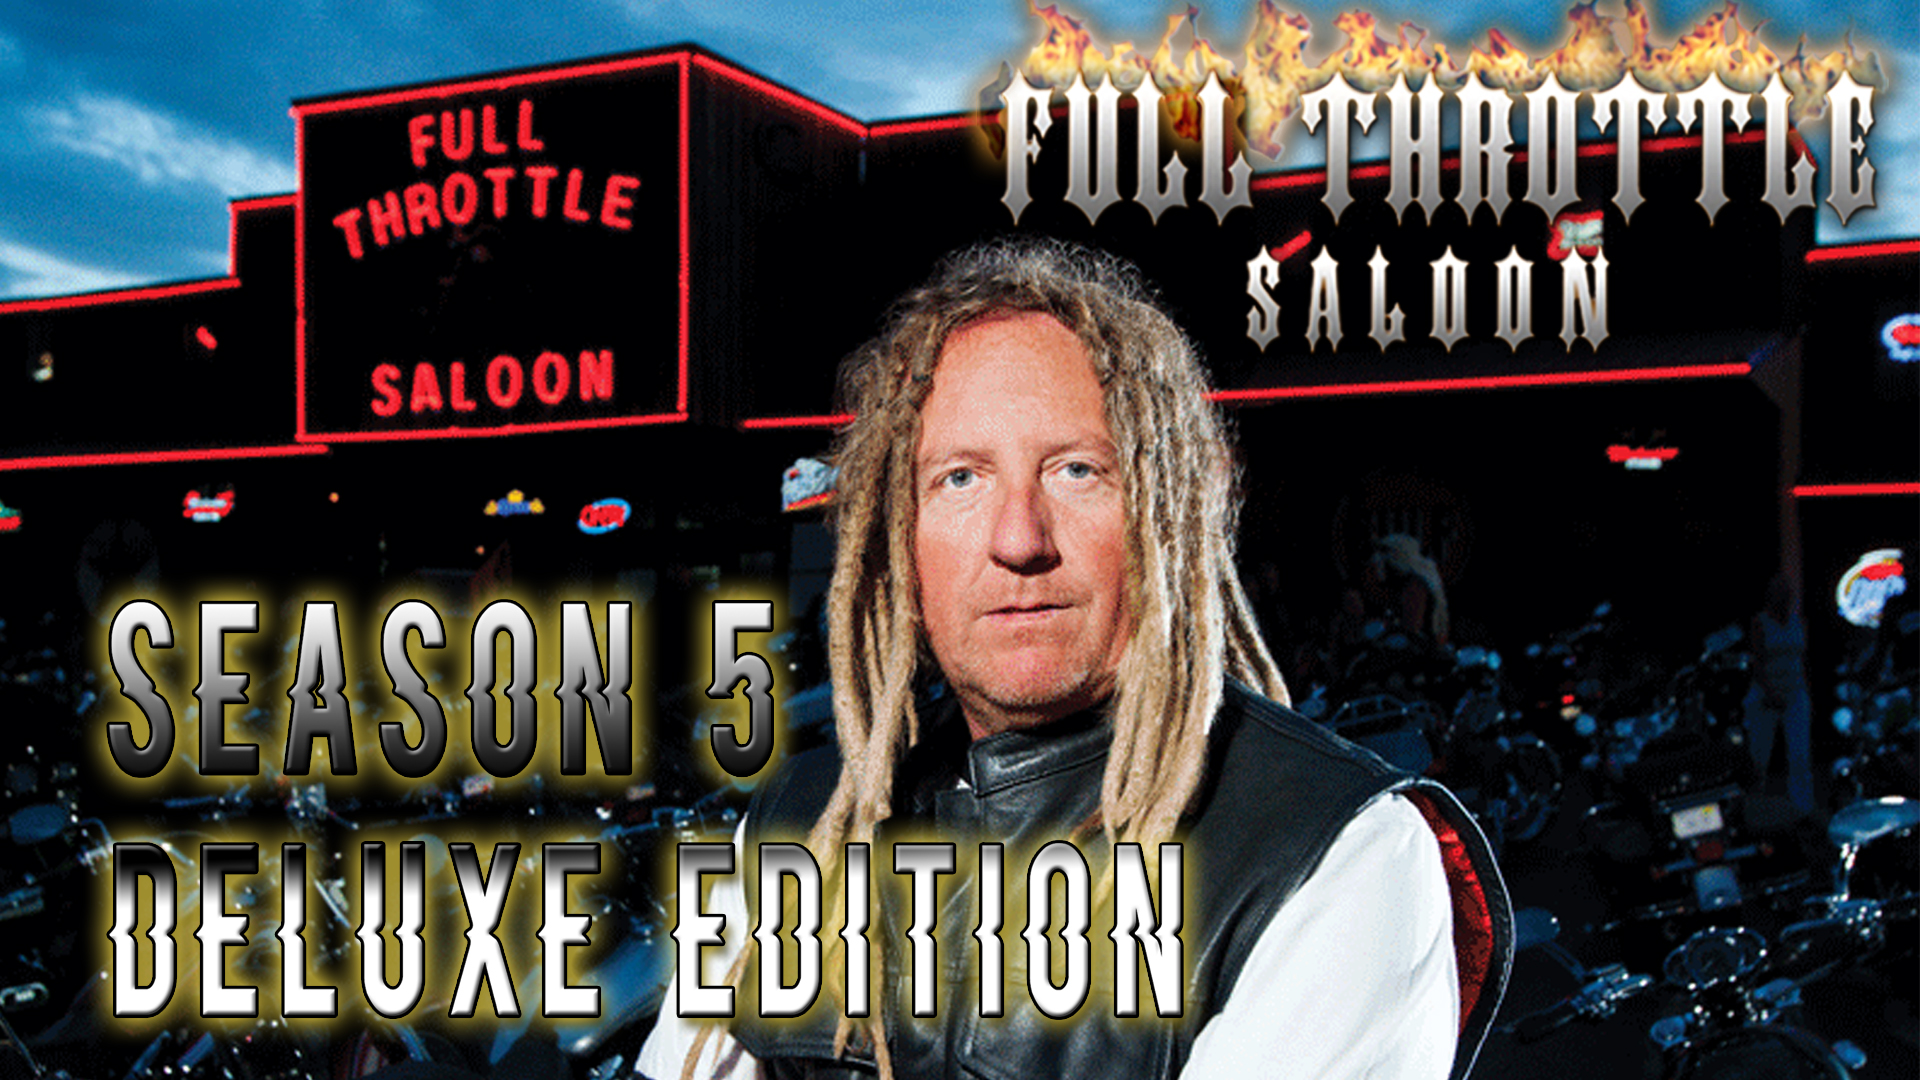 download full throttle saloon series